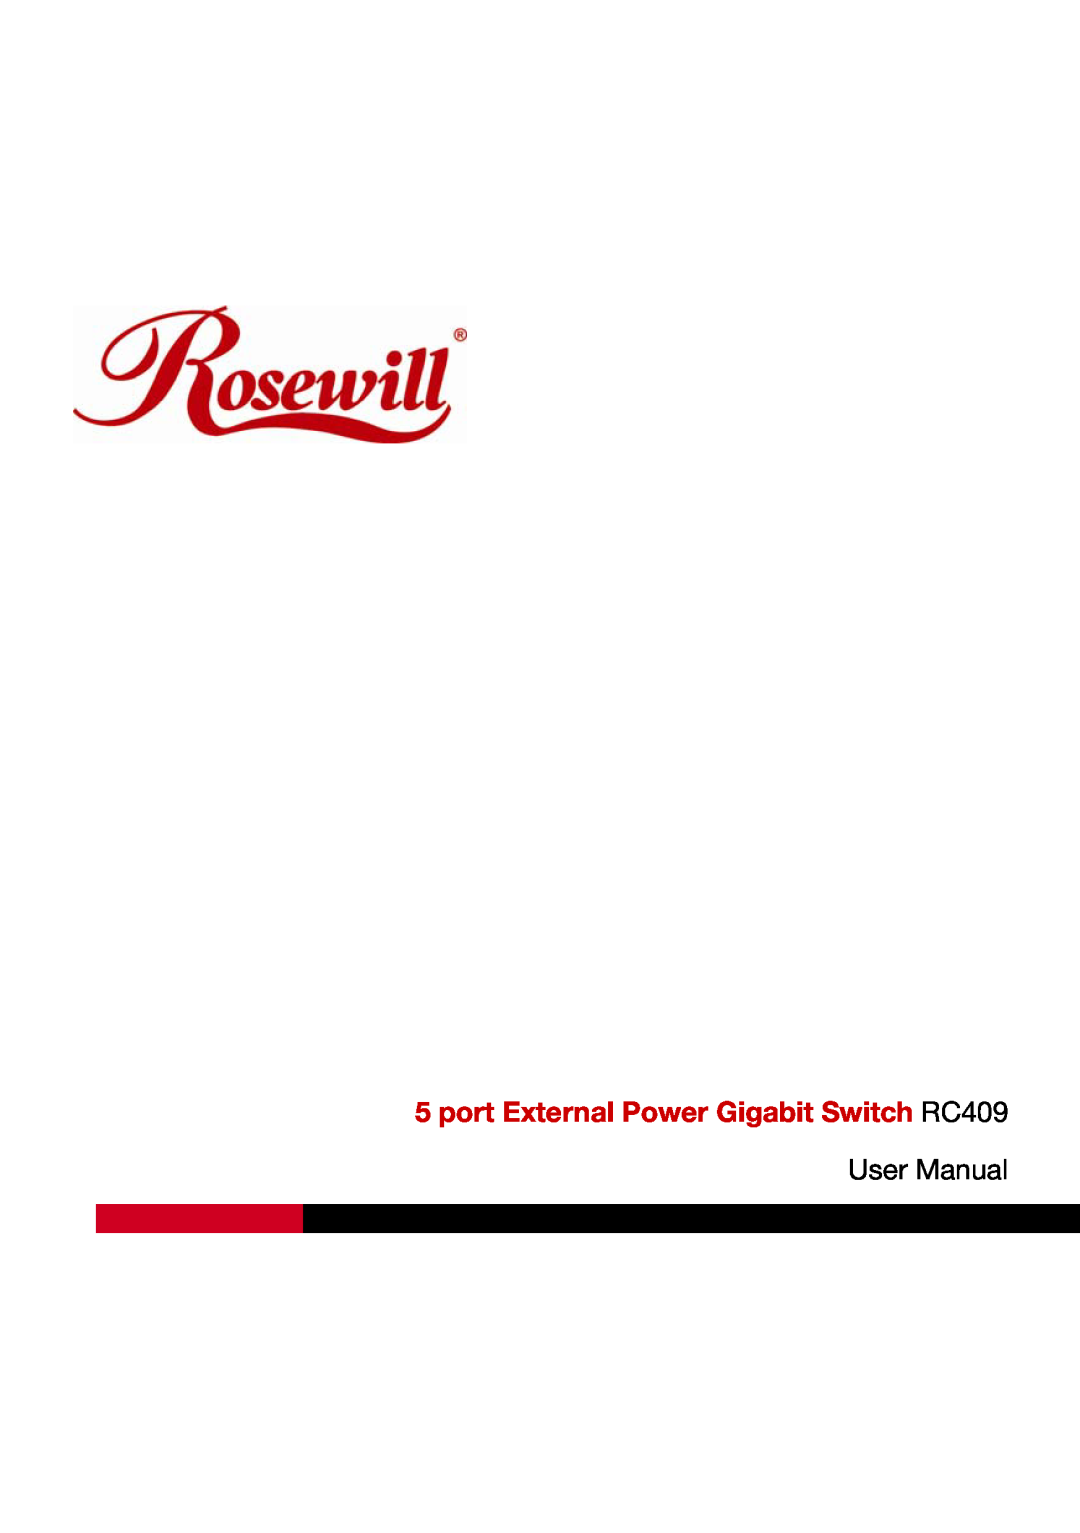 Rosewill user manual port External Power Gigabit Switch RC409, User Manual 